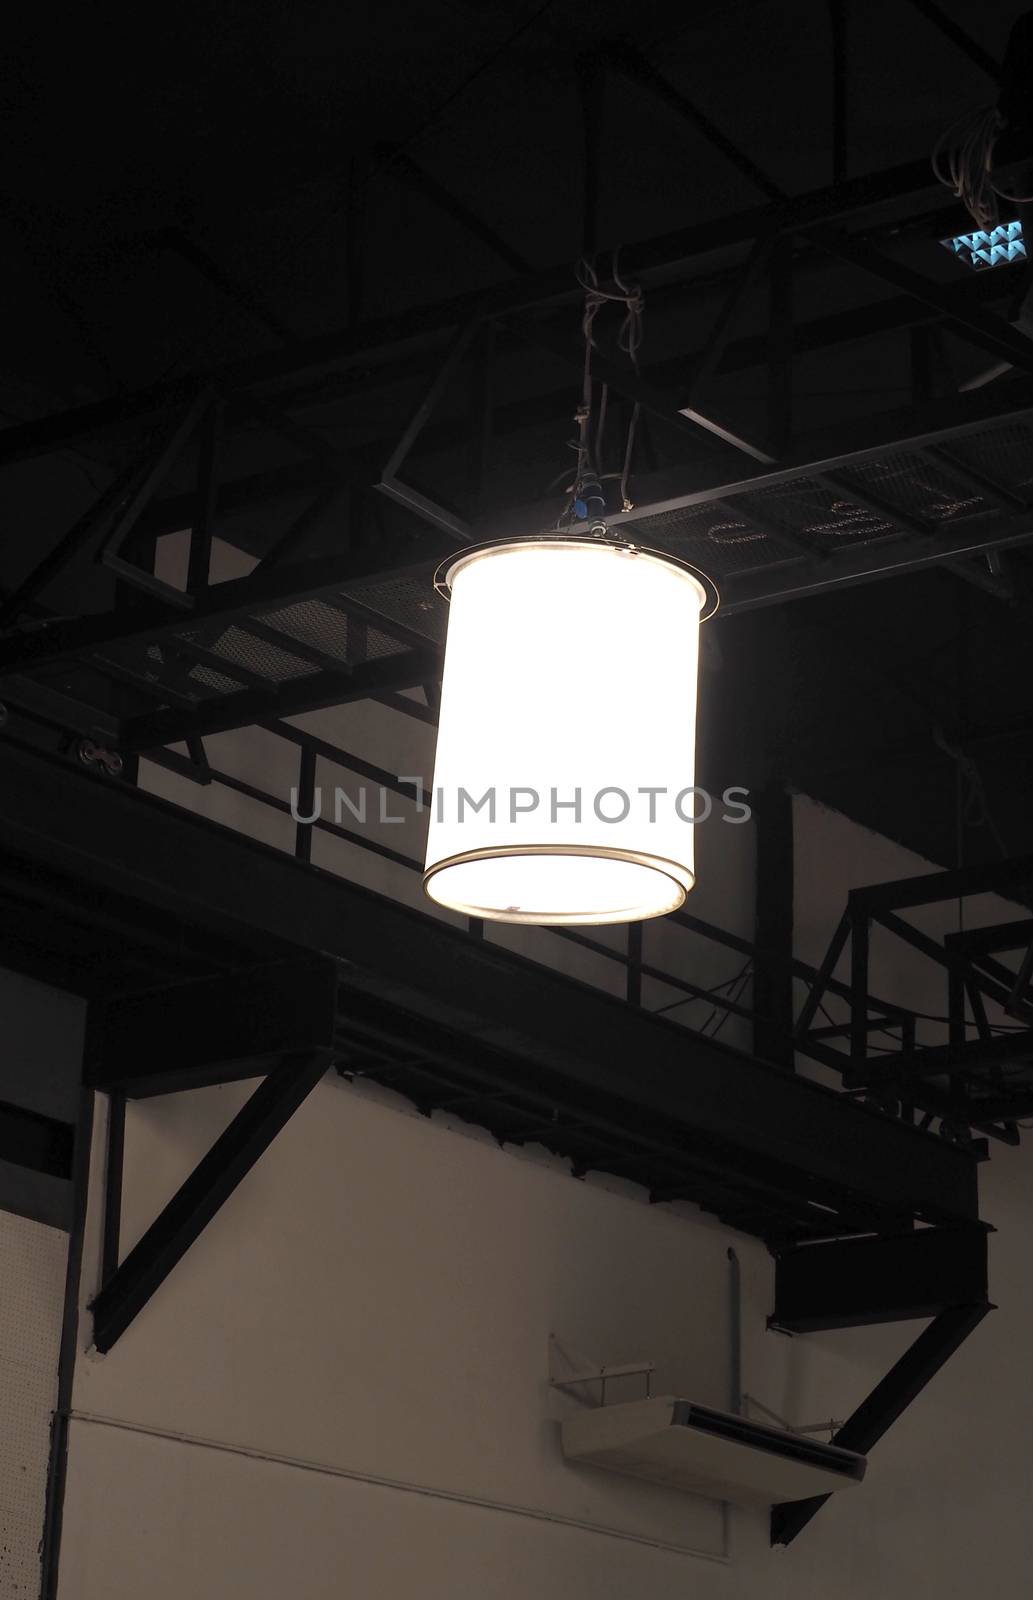 Studio Hanging Light Tent equipment. by gnepphoto